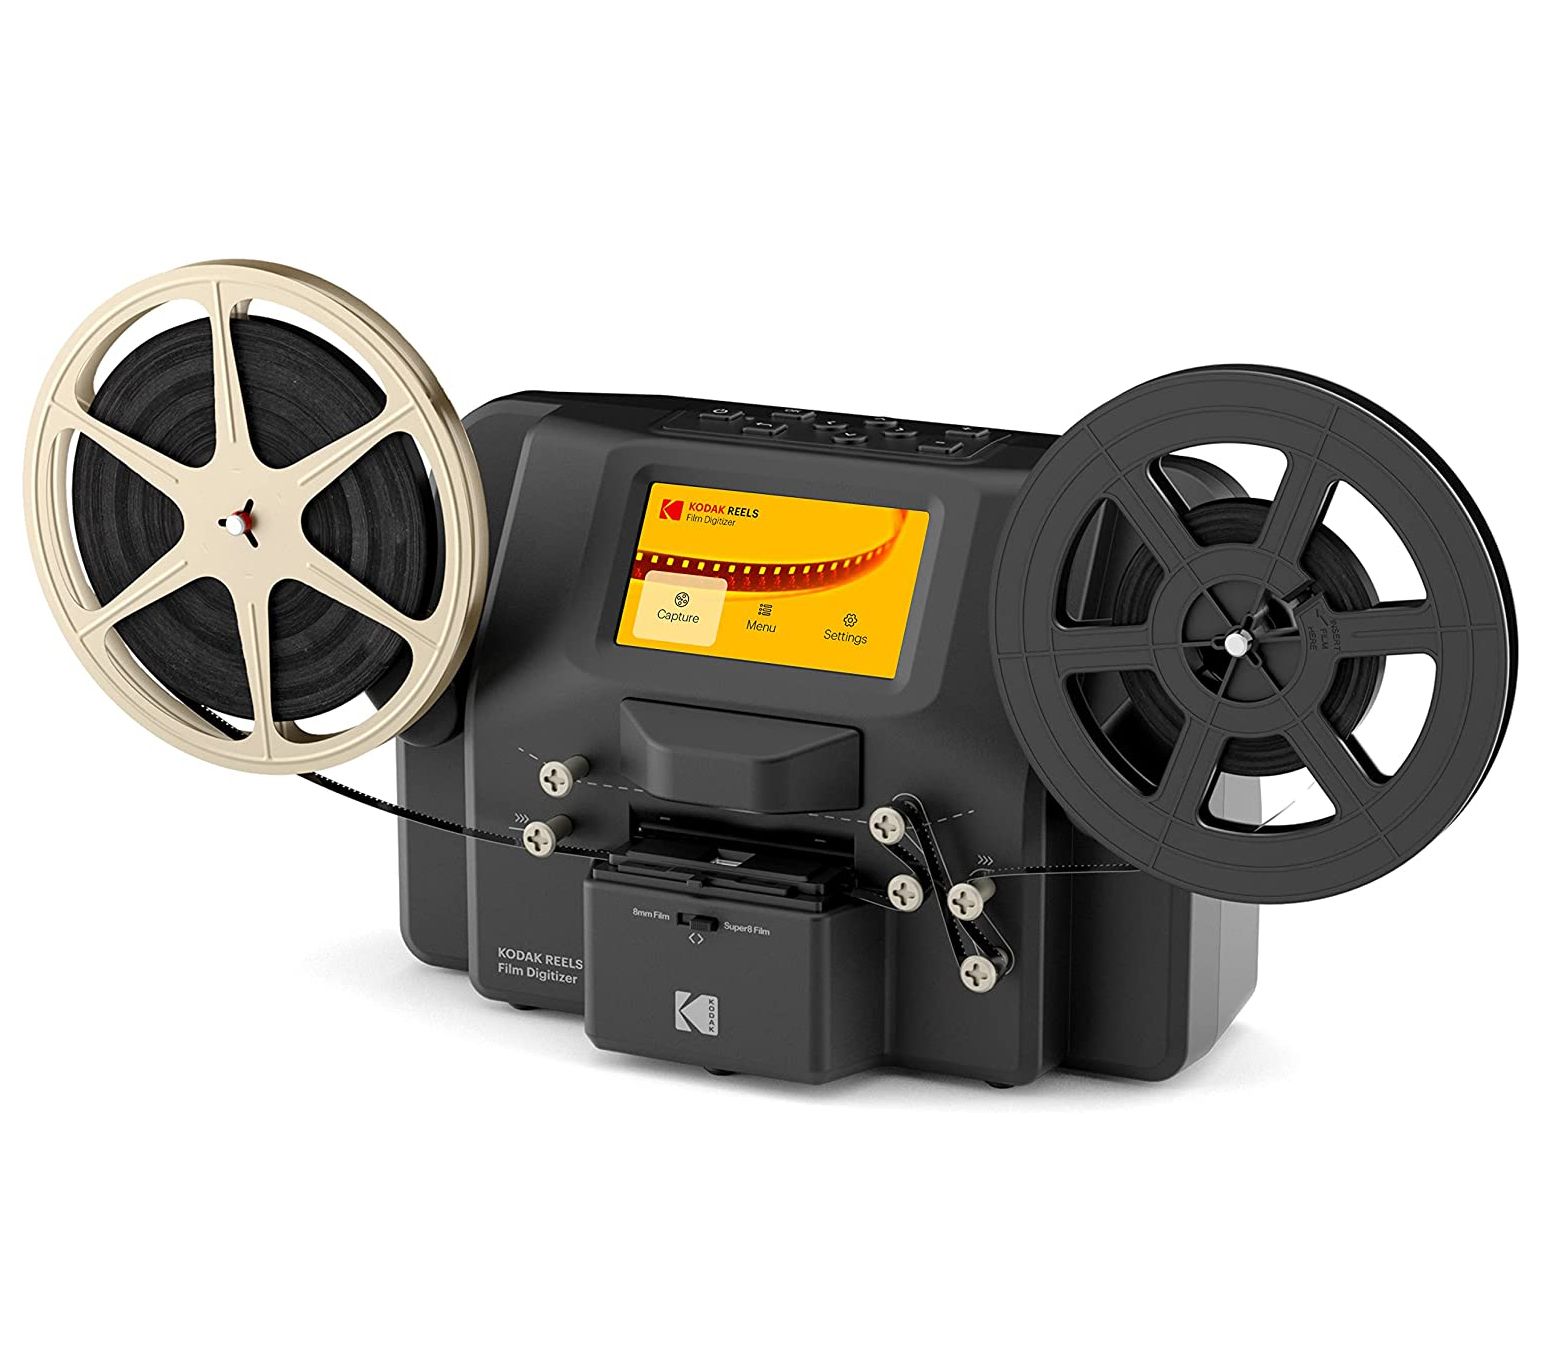 KODAK Reels Digitizer 8mm & Super 8 Films PhotoScanner 